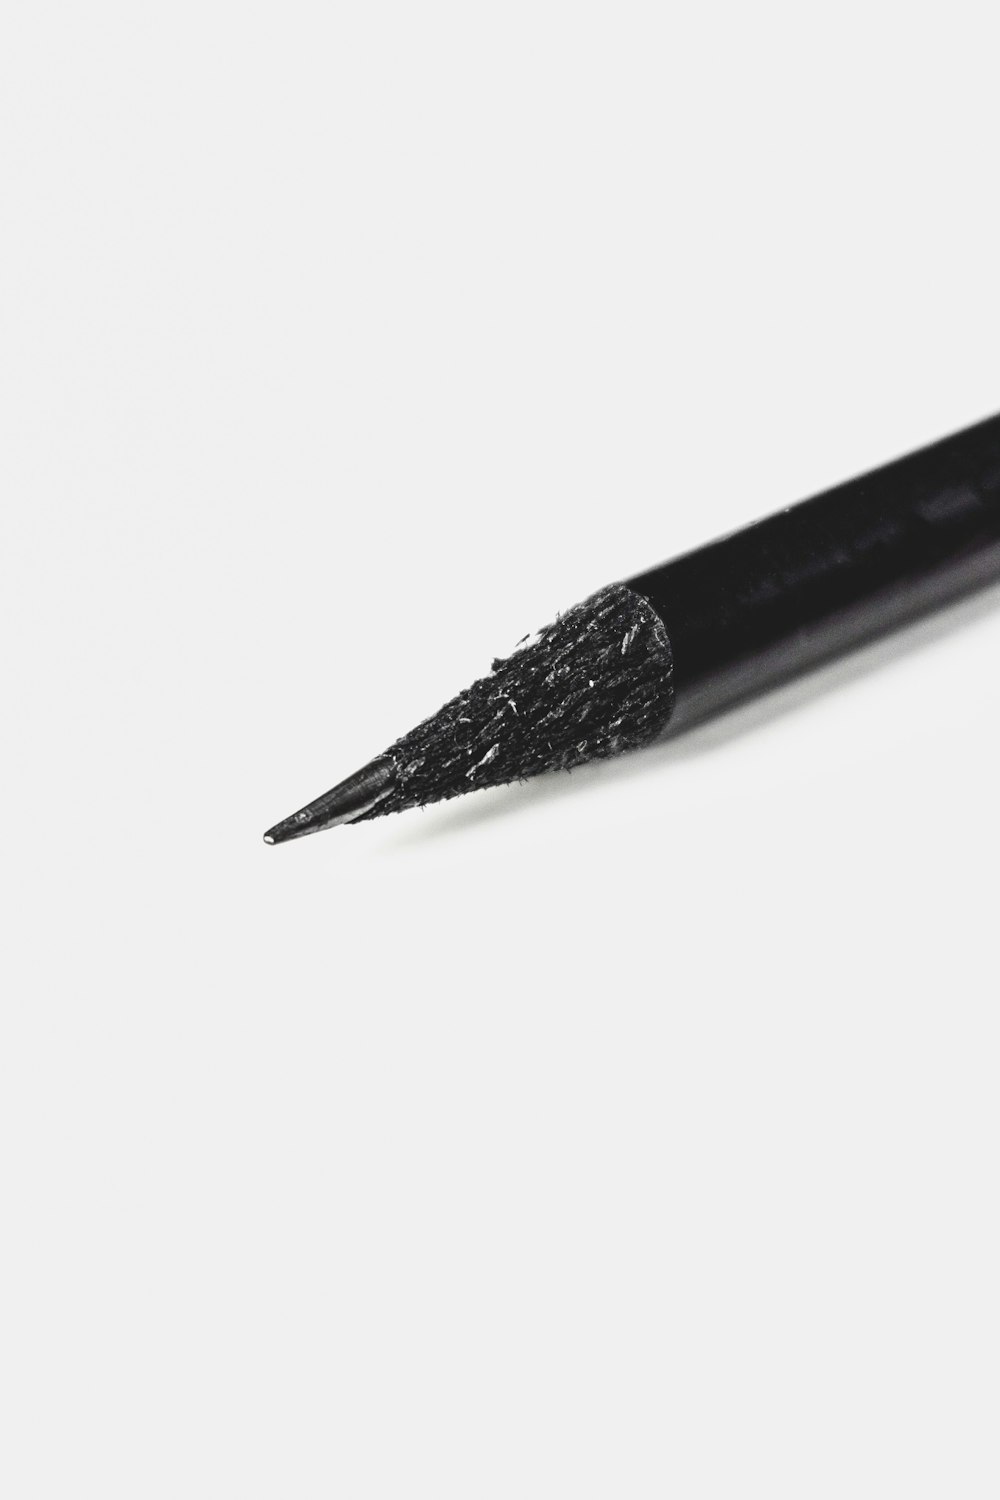 lápiz negro sobre superficie blanca